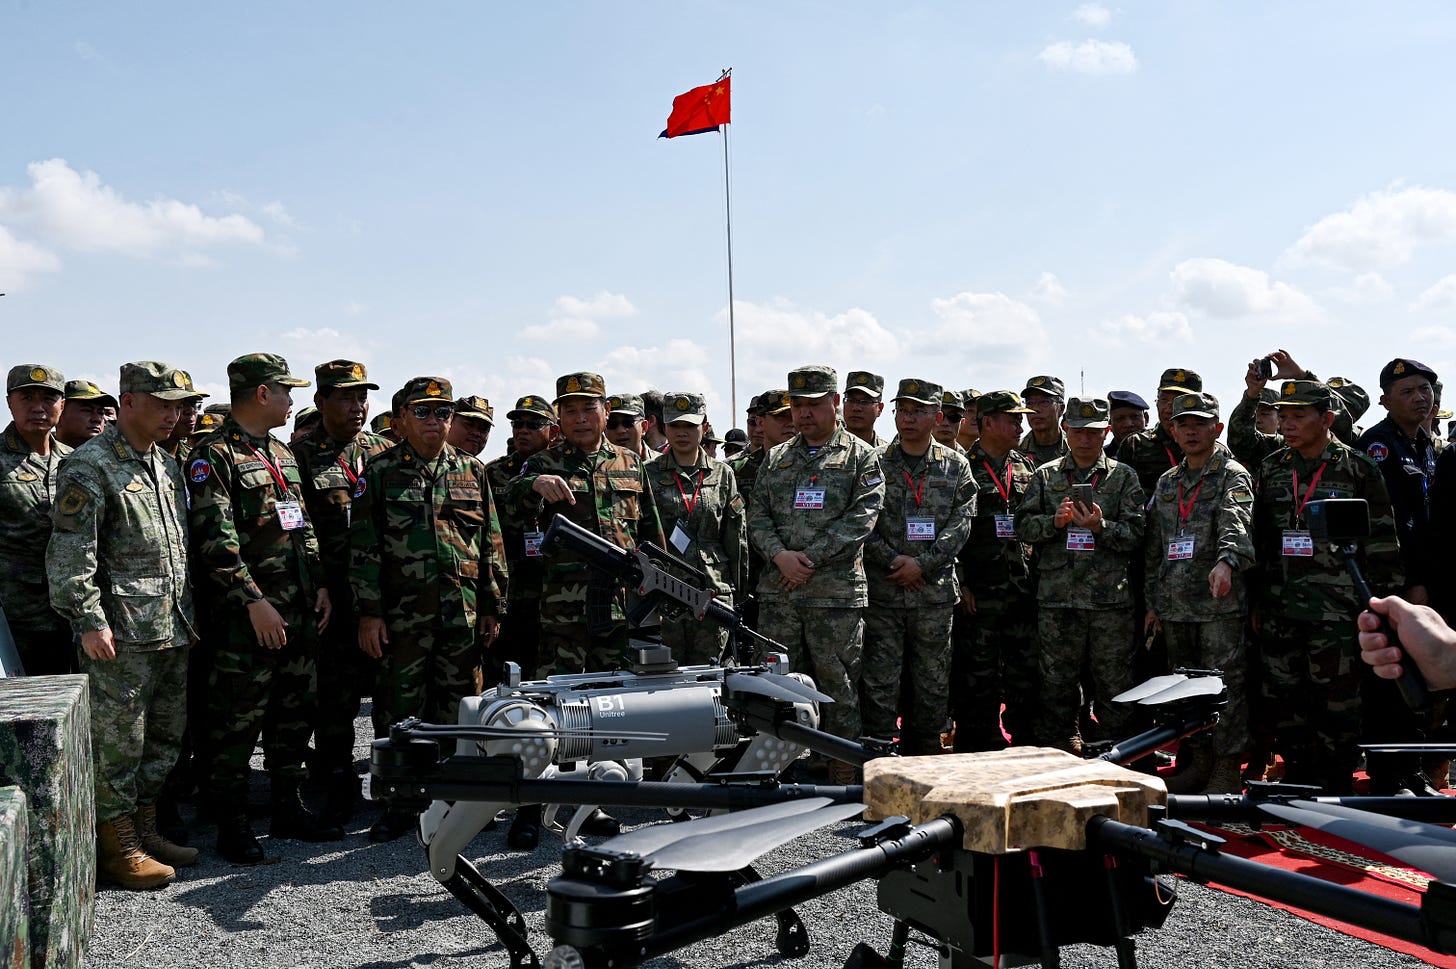 China and Cambodia did military drills with machine gun robot dogs